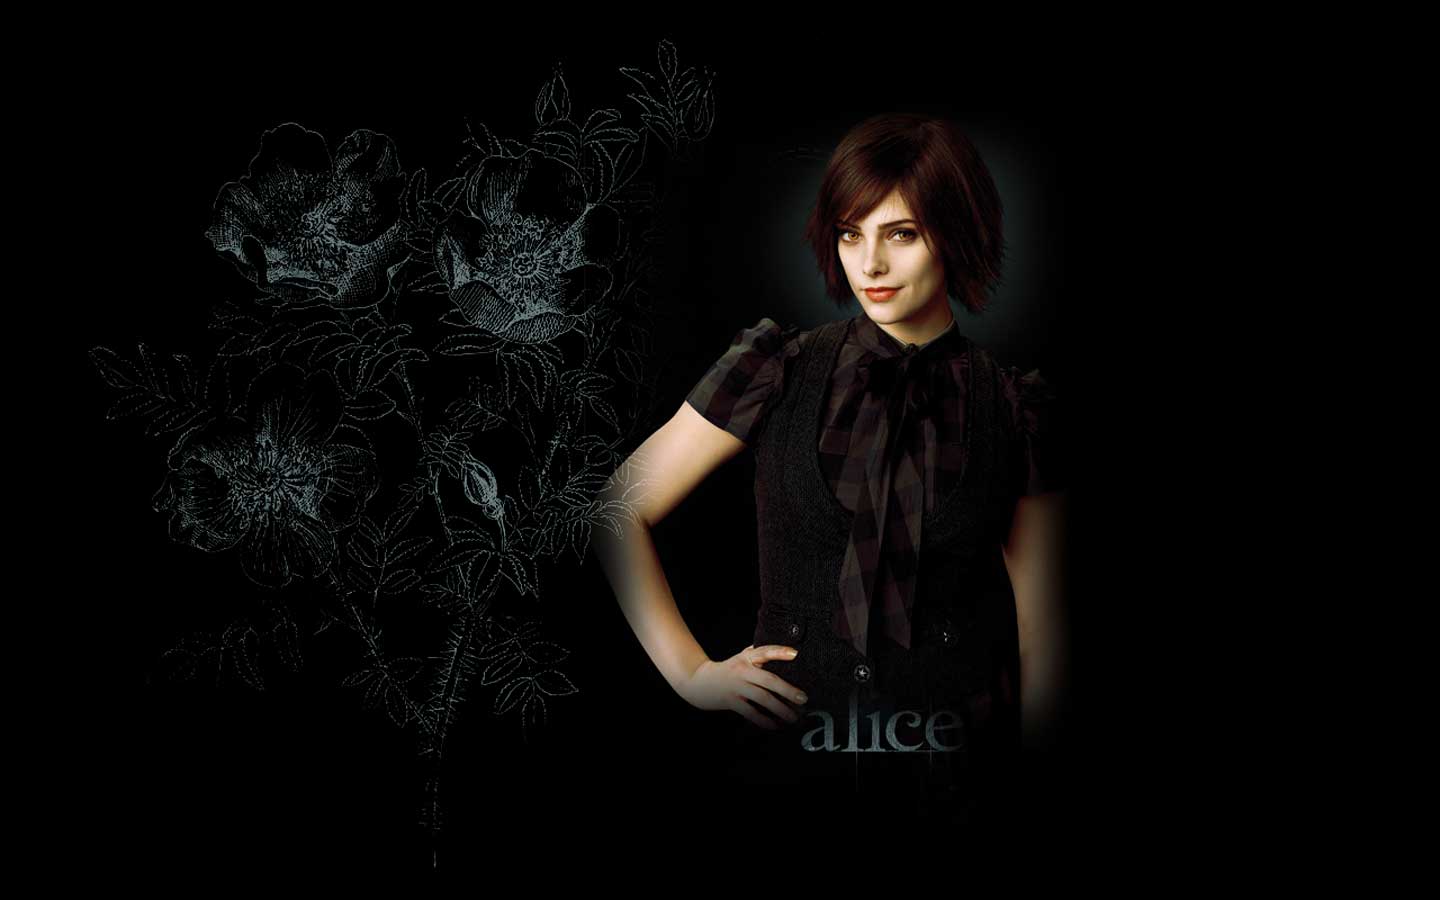 Twilight Alice Cullen Wallpaper